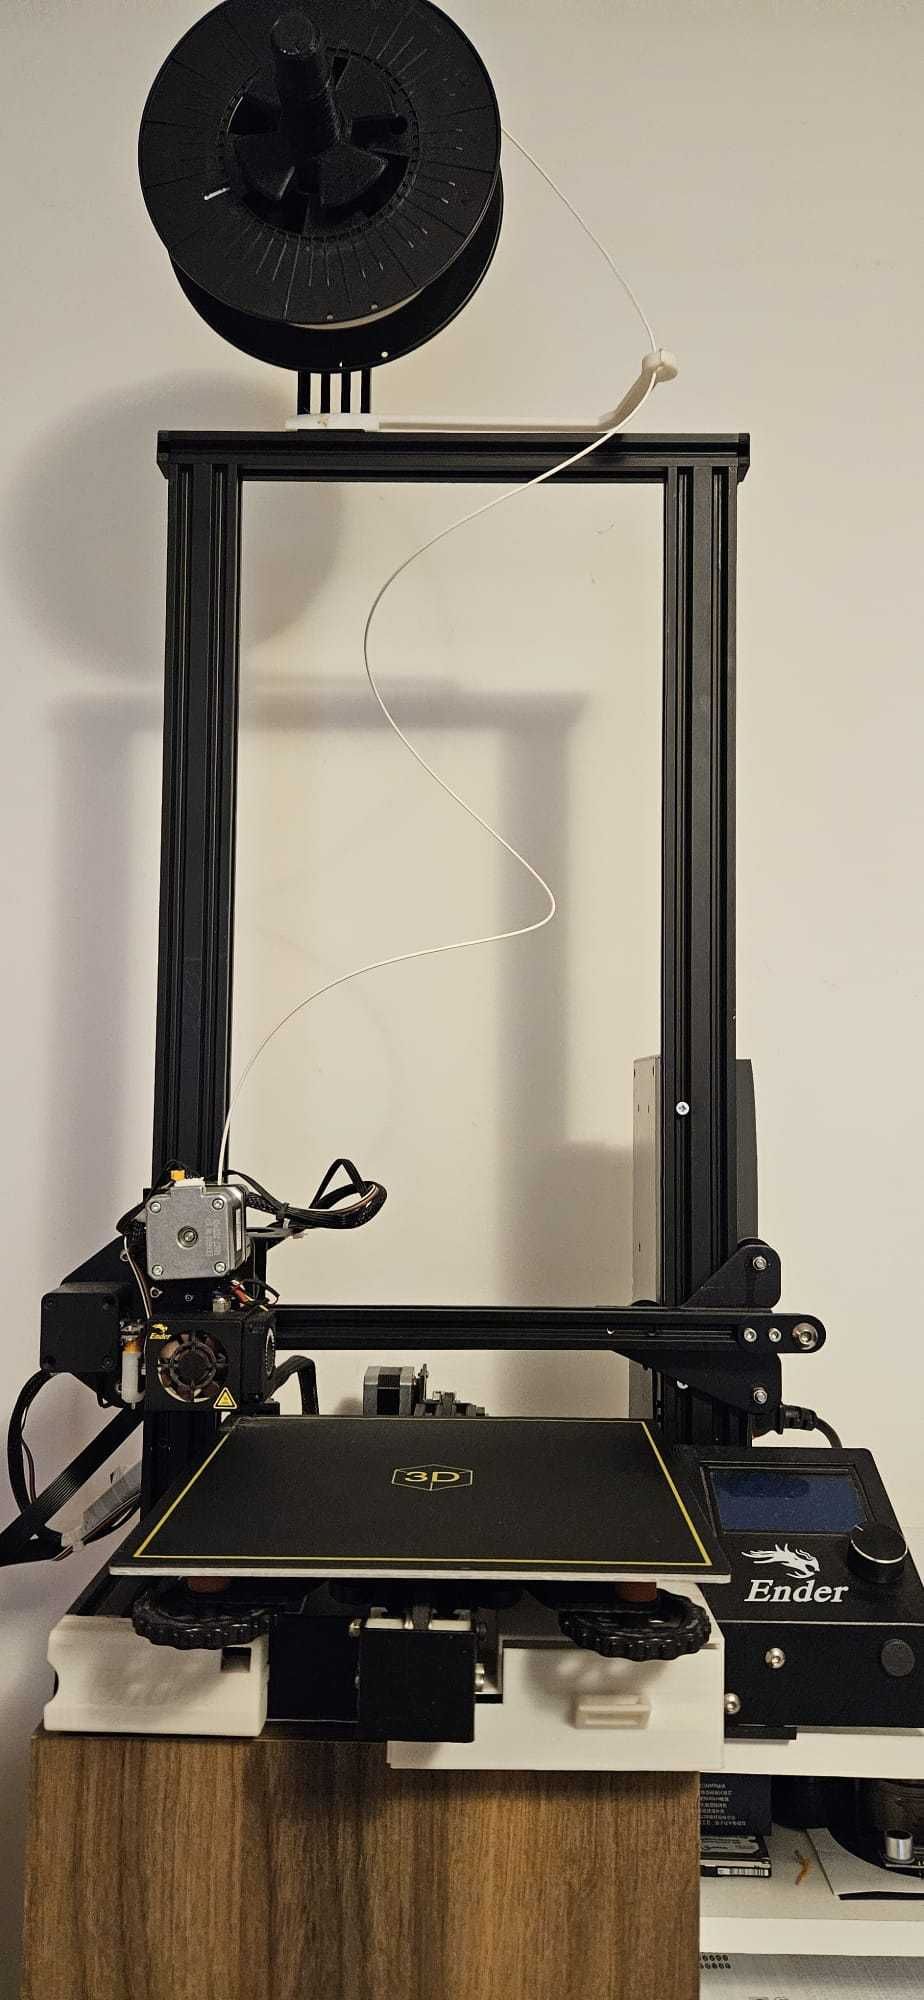 Imprimanta 3D Creality Ender 3 Pro, PUTIN FOLOSITA cu UPGRADE-URI